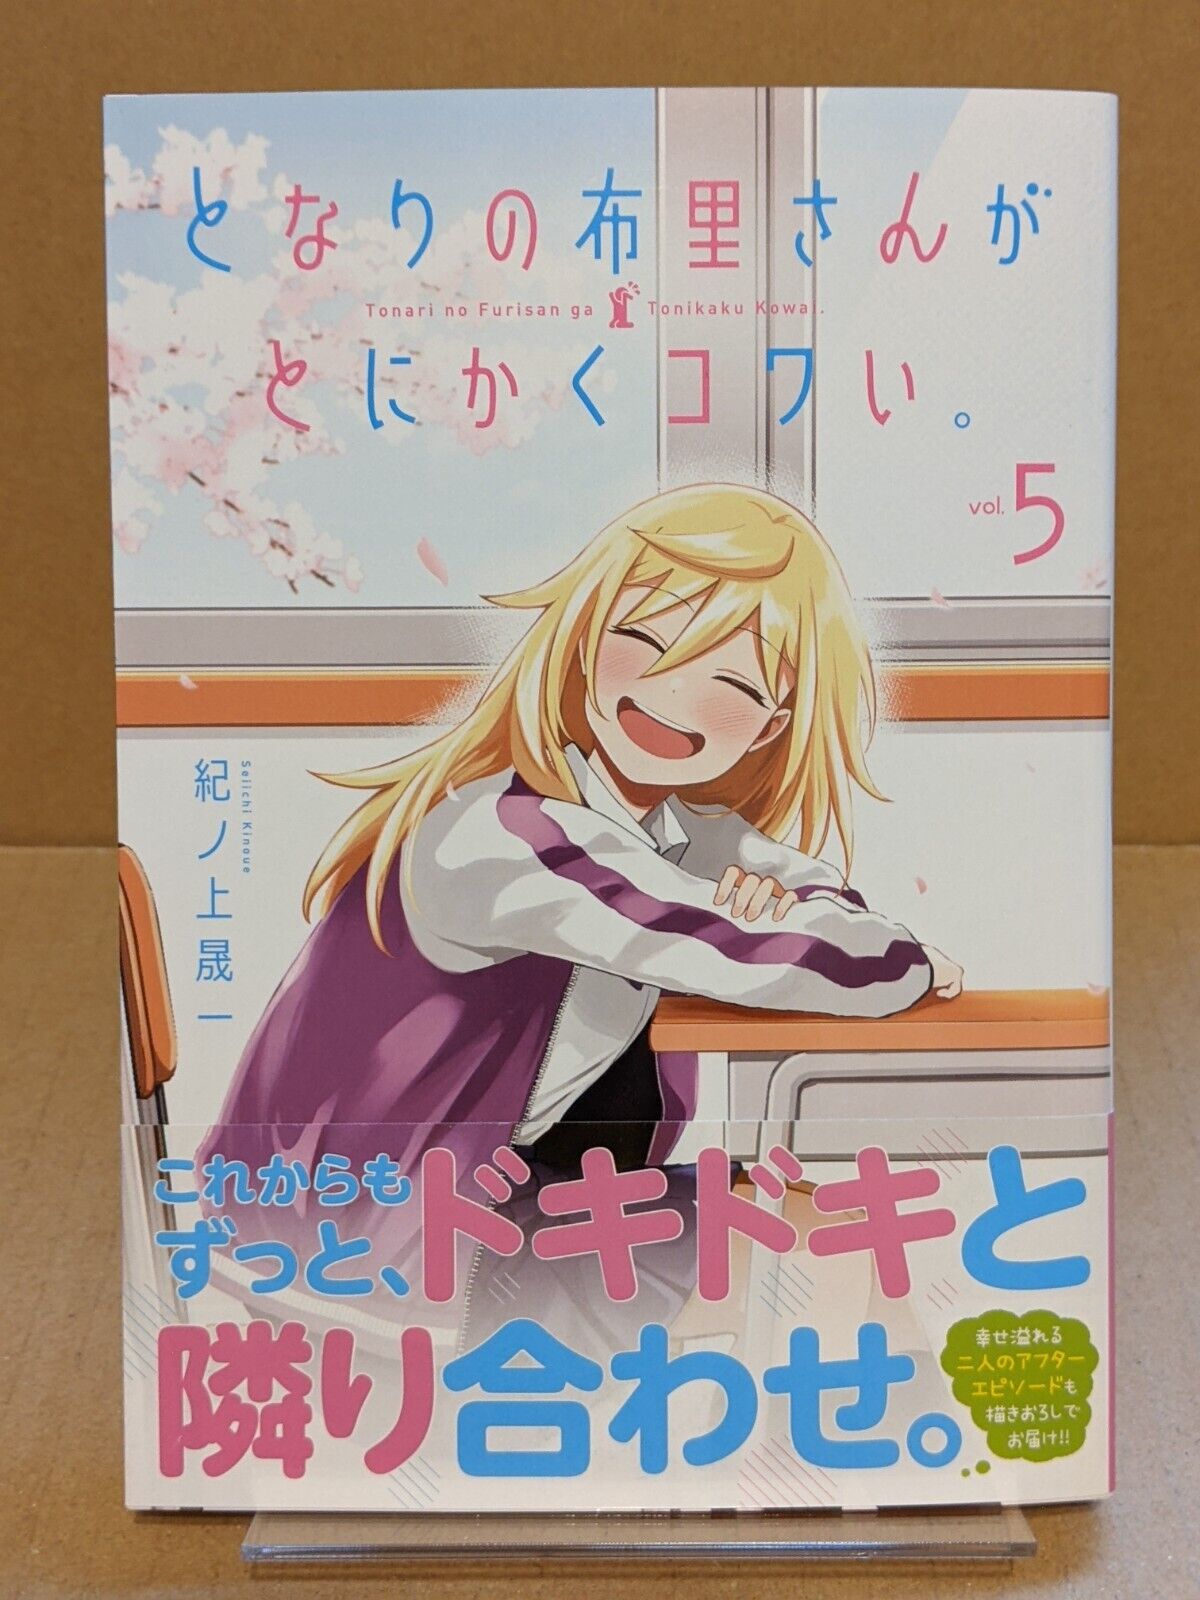 Tonari no Furi-san ga Tonikaku Kowai. Vol. 5 NEW Kinoue Seiichi Japanese Manga